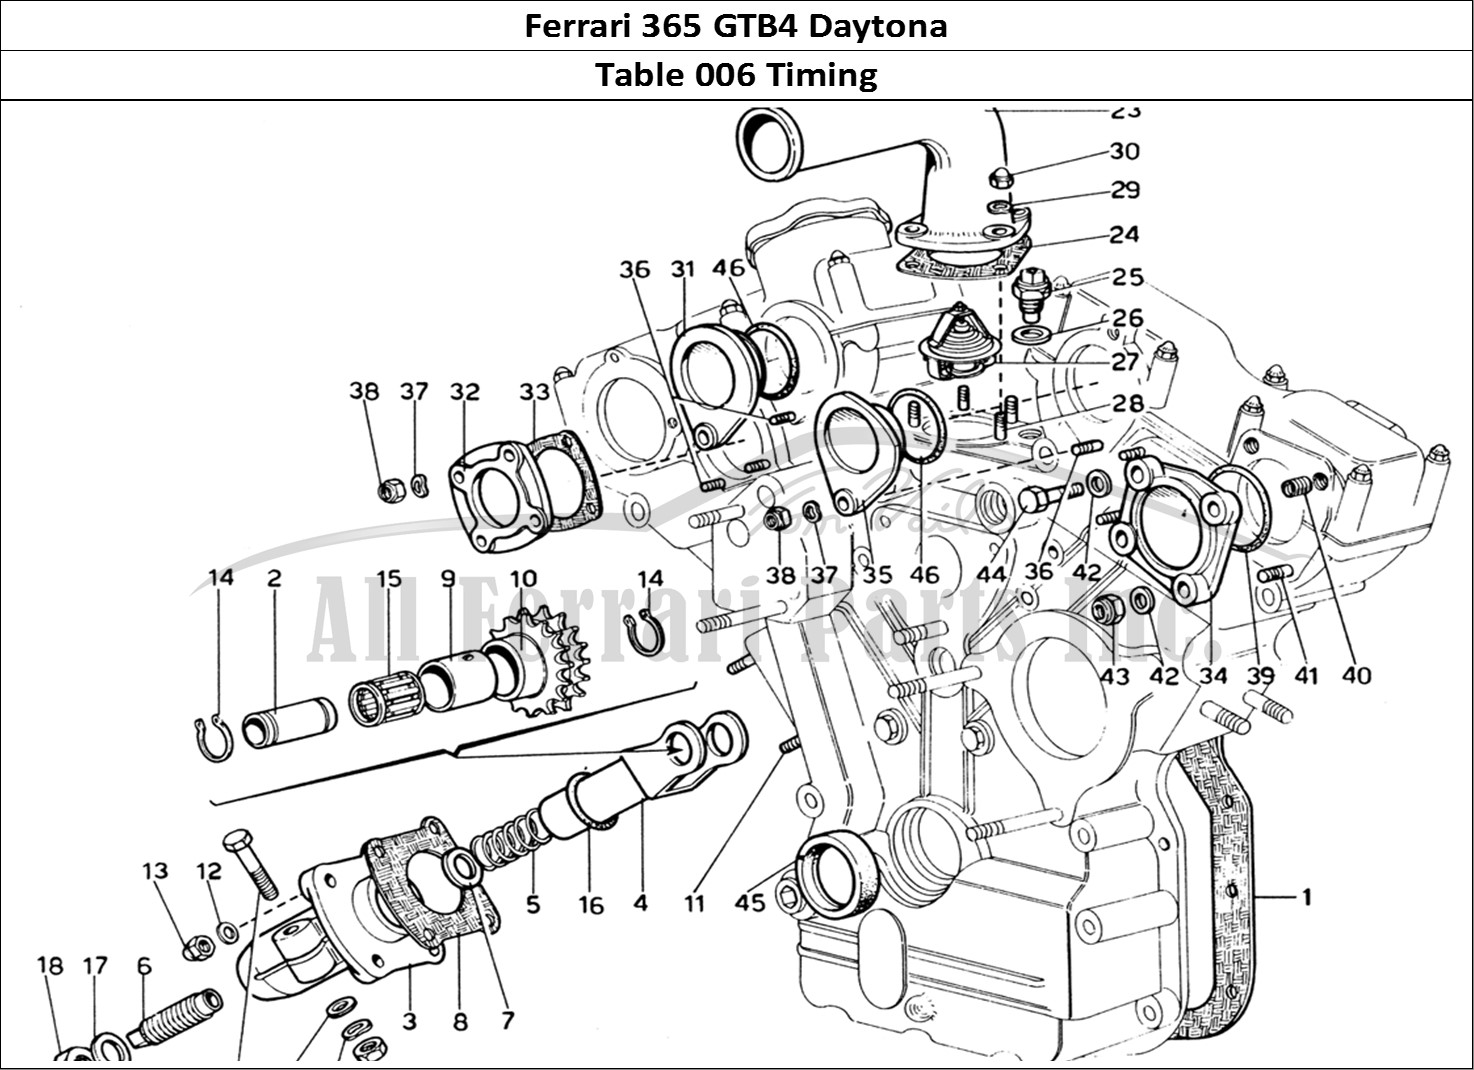 Ferrari Parts Ferrari 365 GTB4 Daytona (1969) Page 006 Timing